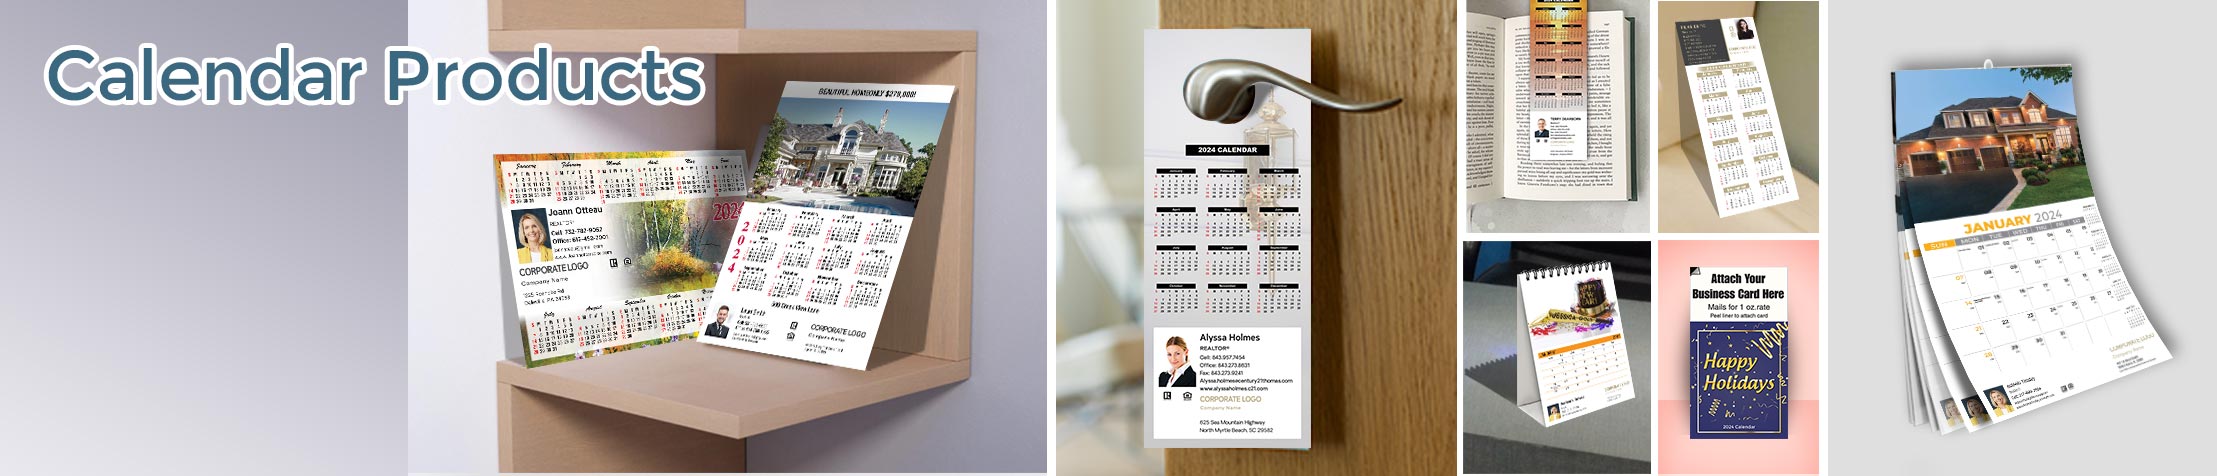 Century 21 Real Estate Calendar Products - Century 21  2019 calendars, magnets, door hangers, bookmarks, tear away note pads | BestPrintBuy.com